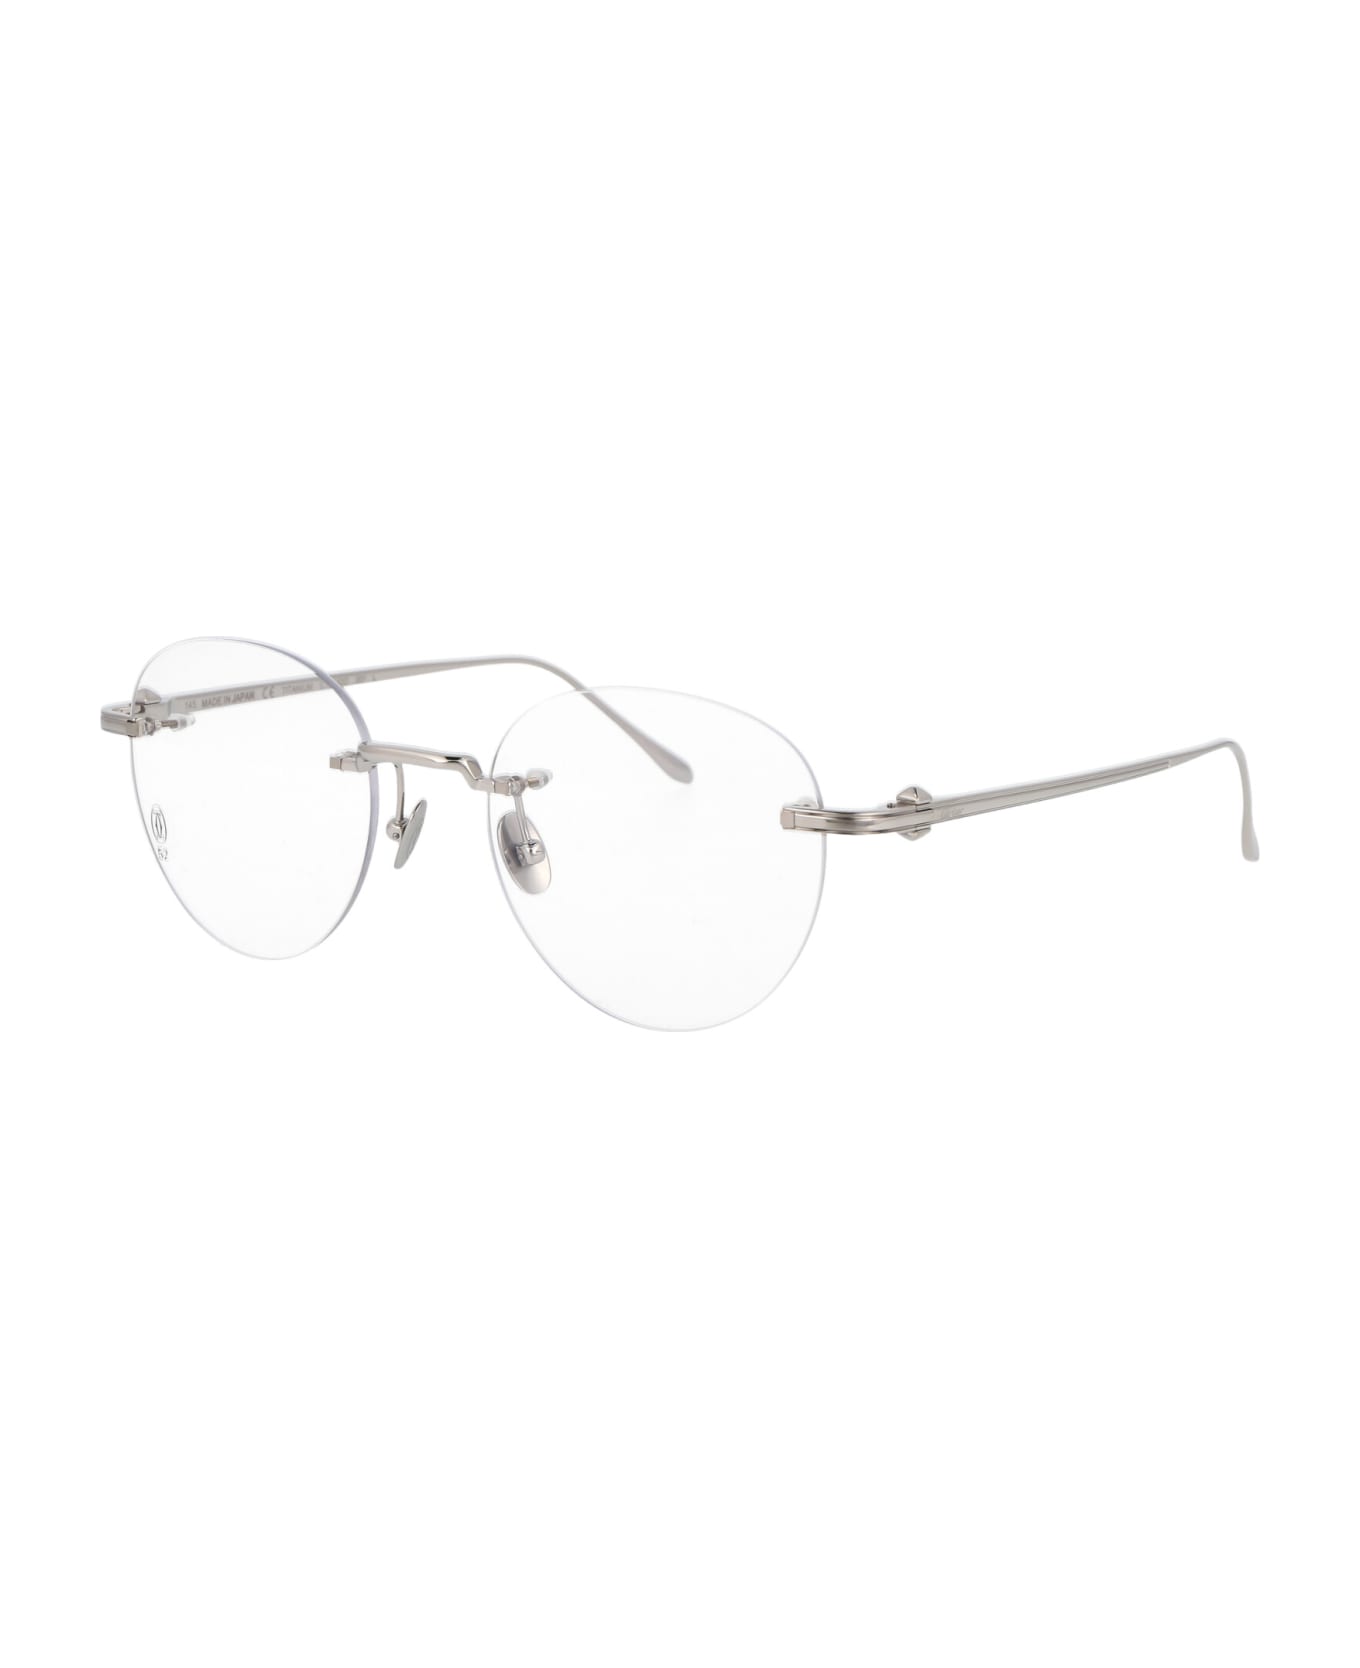 Cartier Eyewear Ct0342o Glasses - 001 SILVER SILVER TRANSPARENT